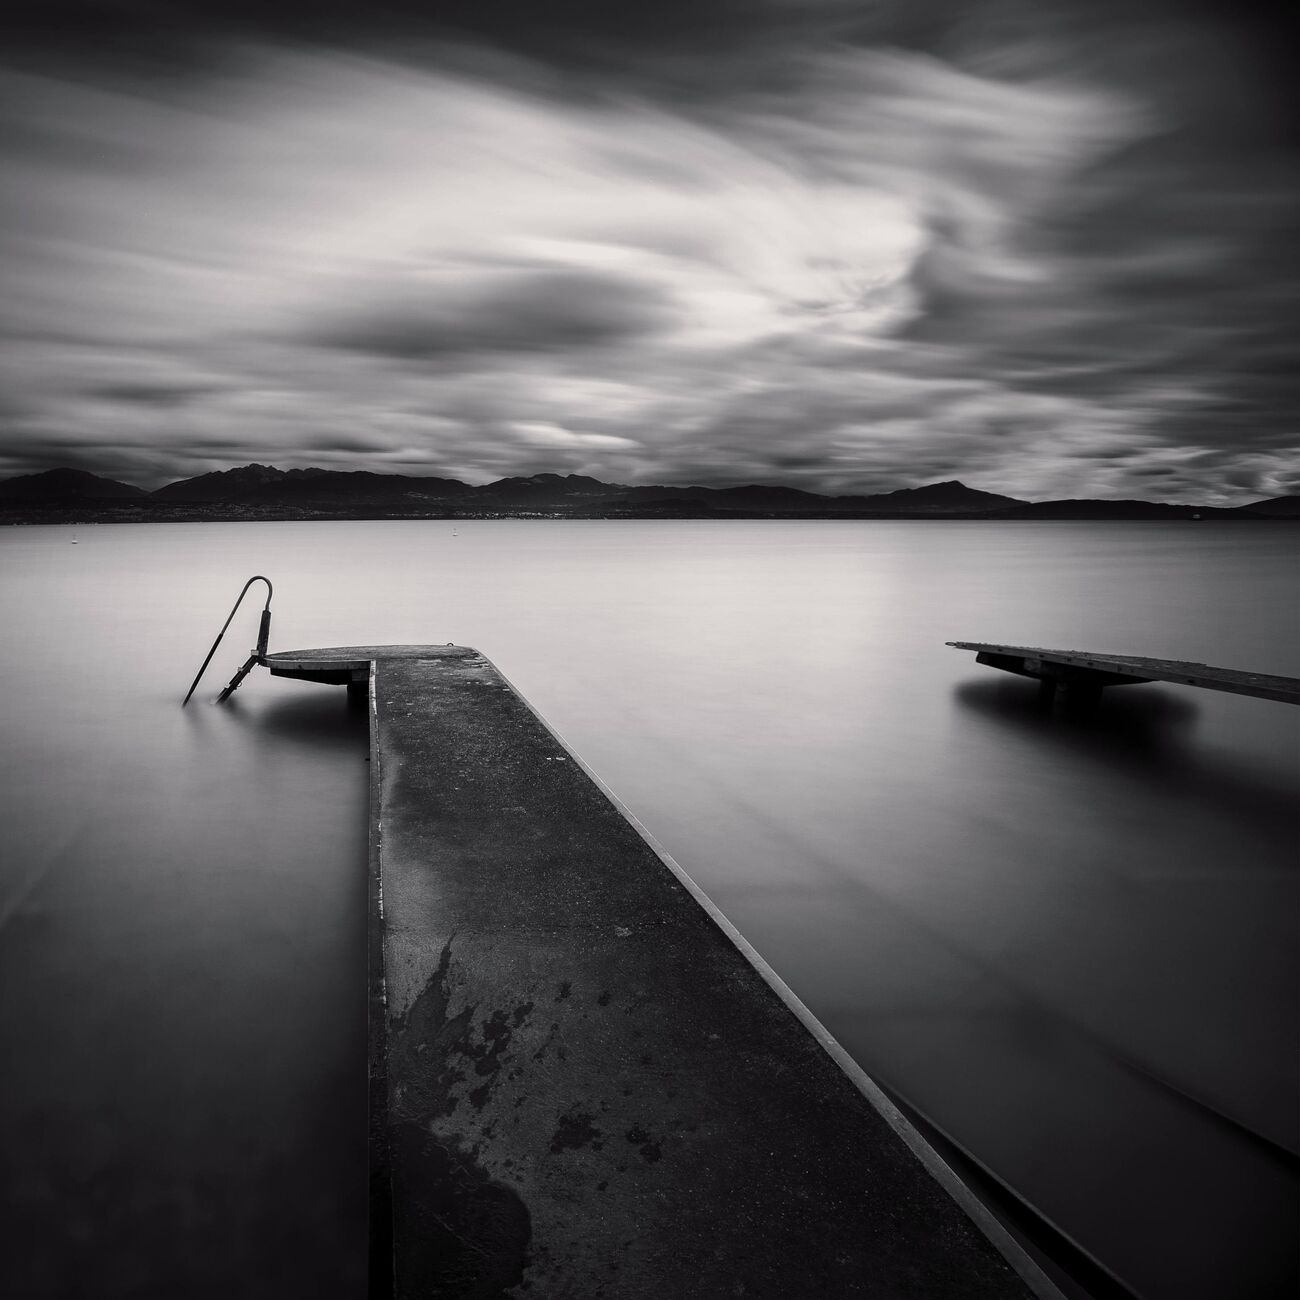 Piers, Study 1, Lake Geneva, Switzerland. August 2014. Ref-11443 - Denis Olivier Photography